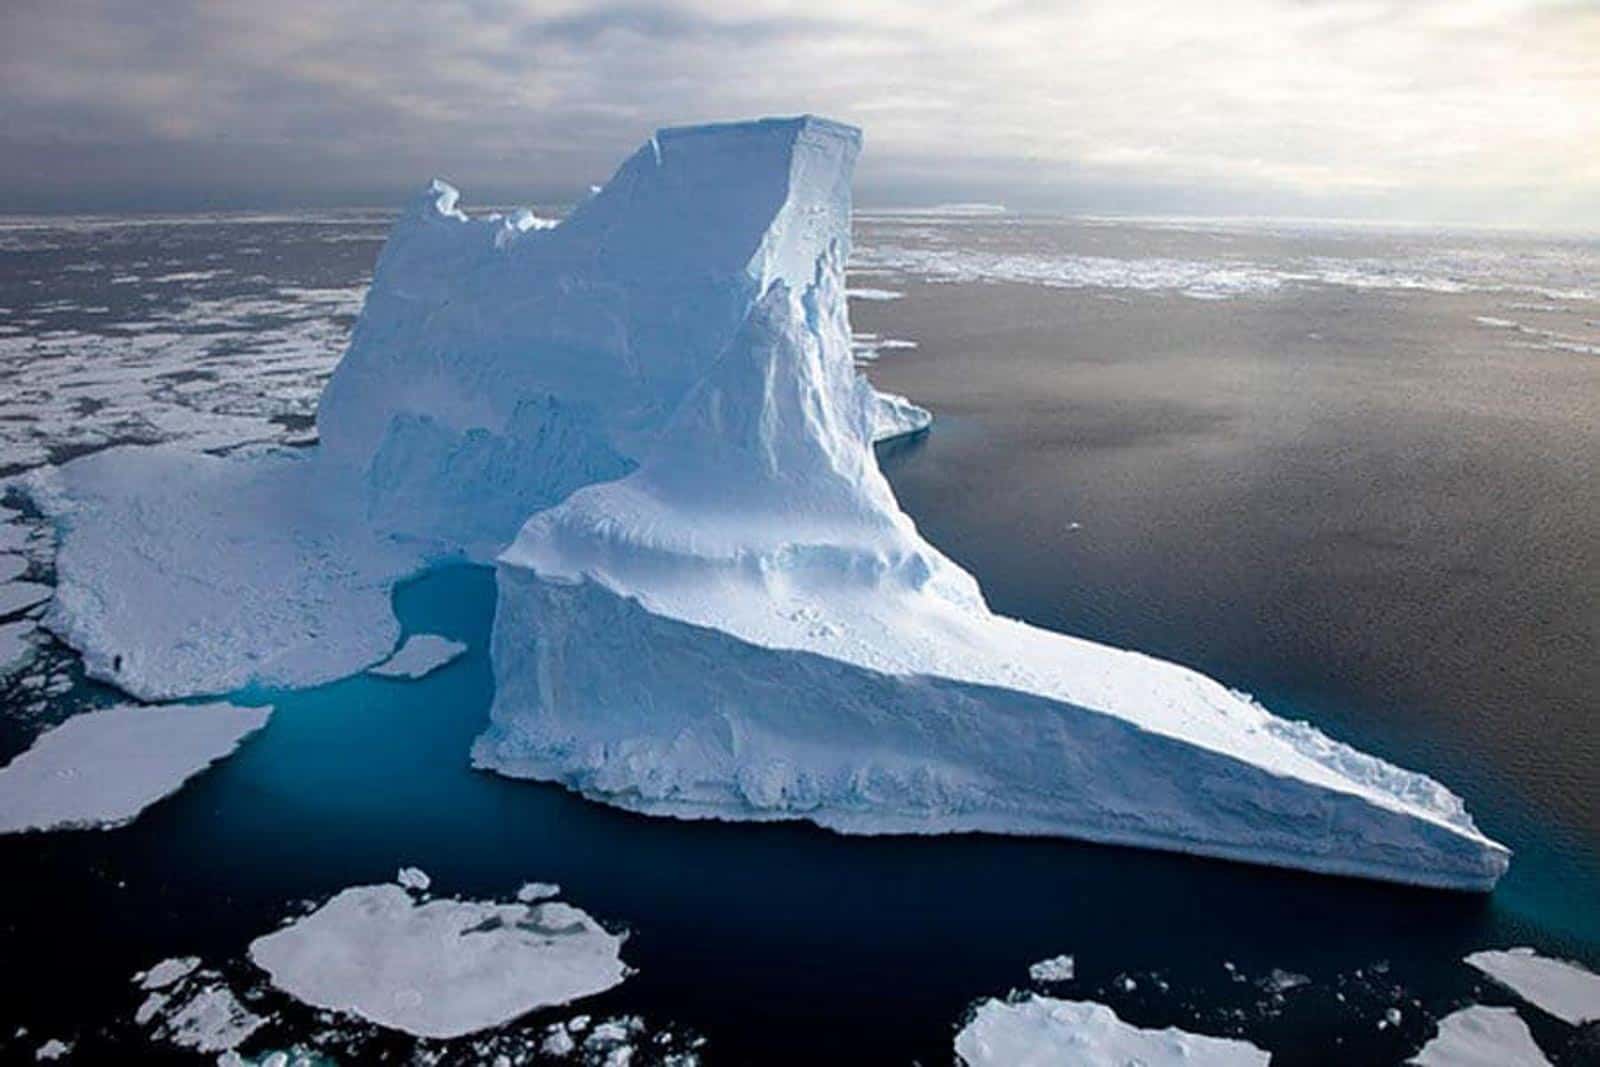 big-hope-for-antarctica-world-s-largest-marine-reserve-created.jpg